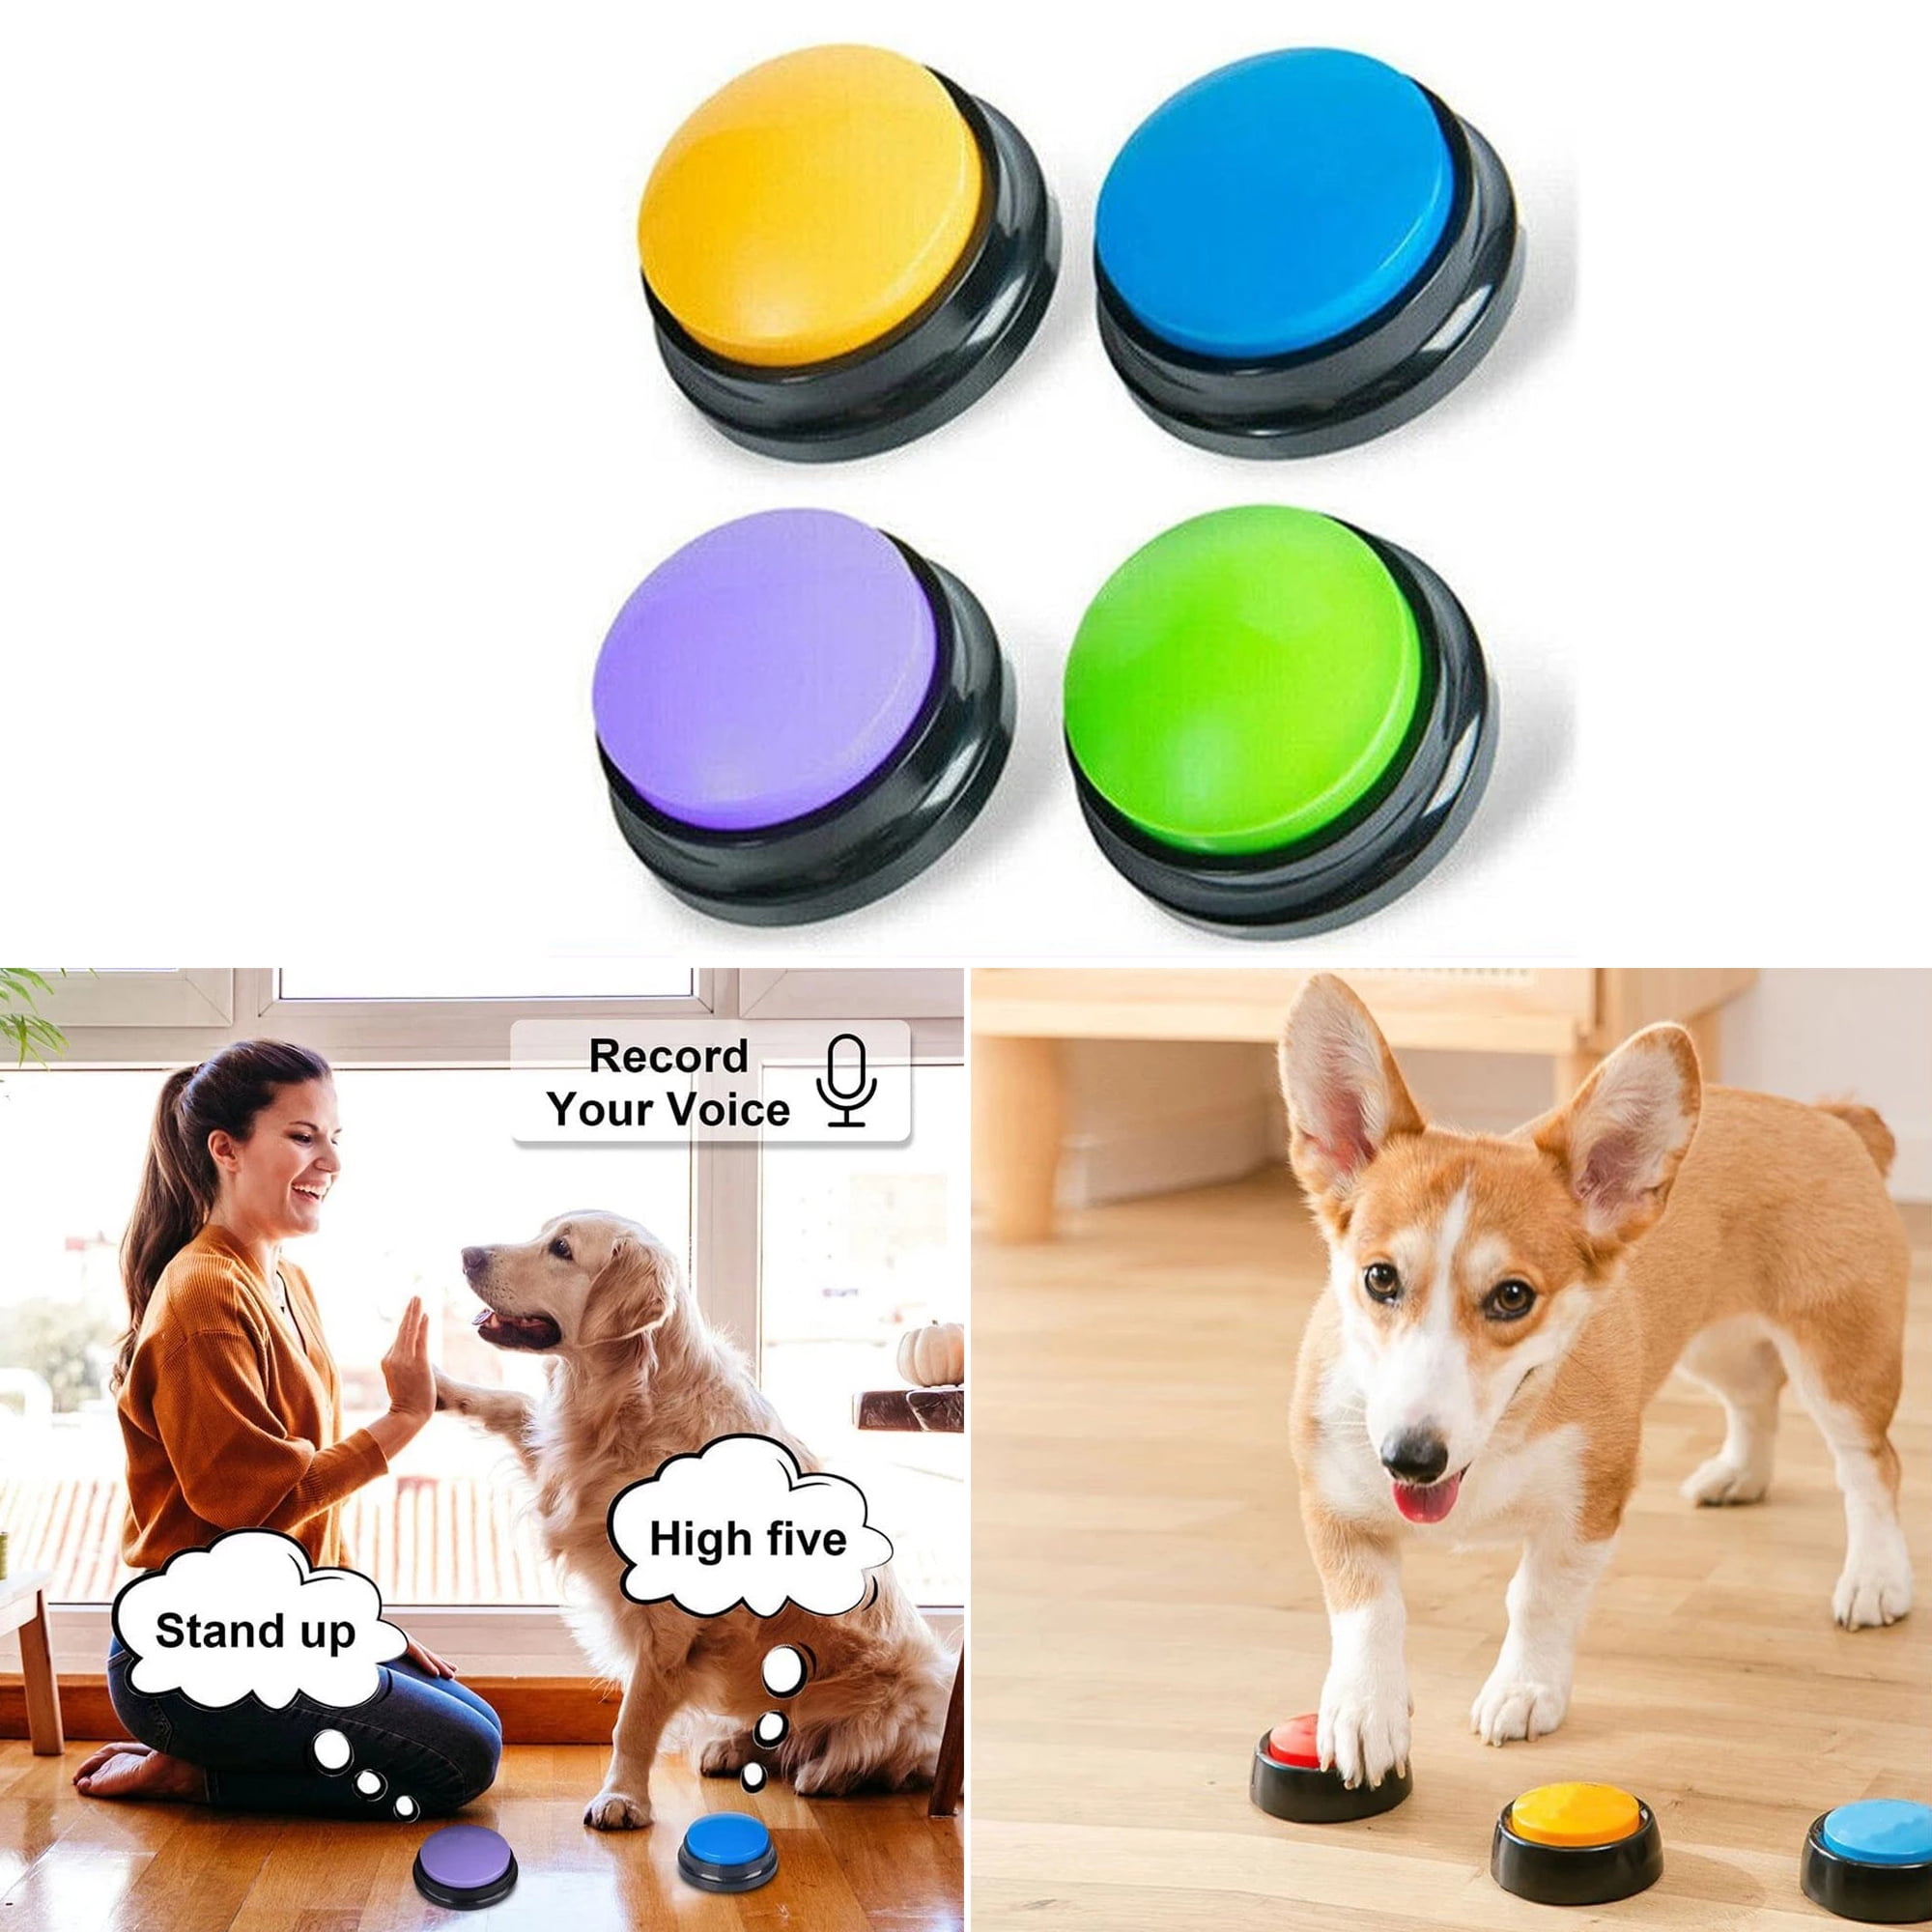 Recordable Dog Buttons - Pet Training Buzzer Set (4 France